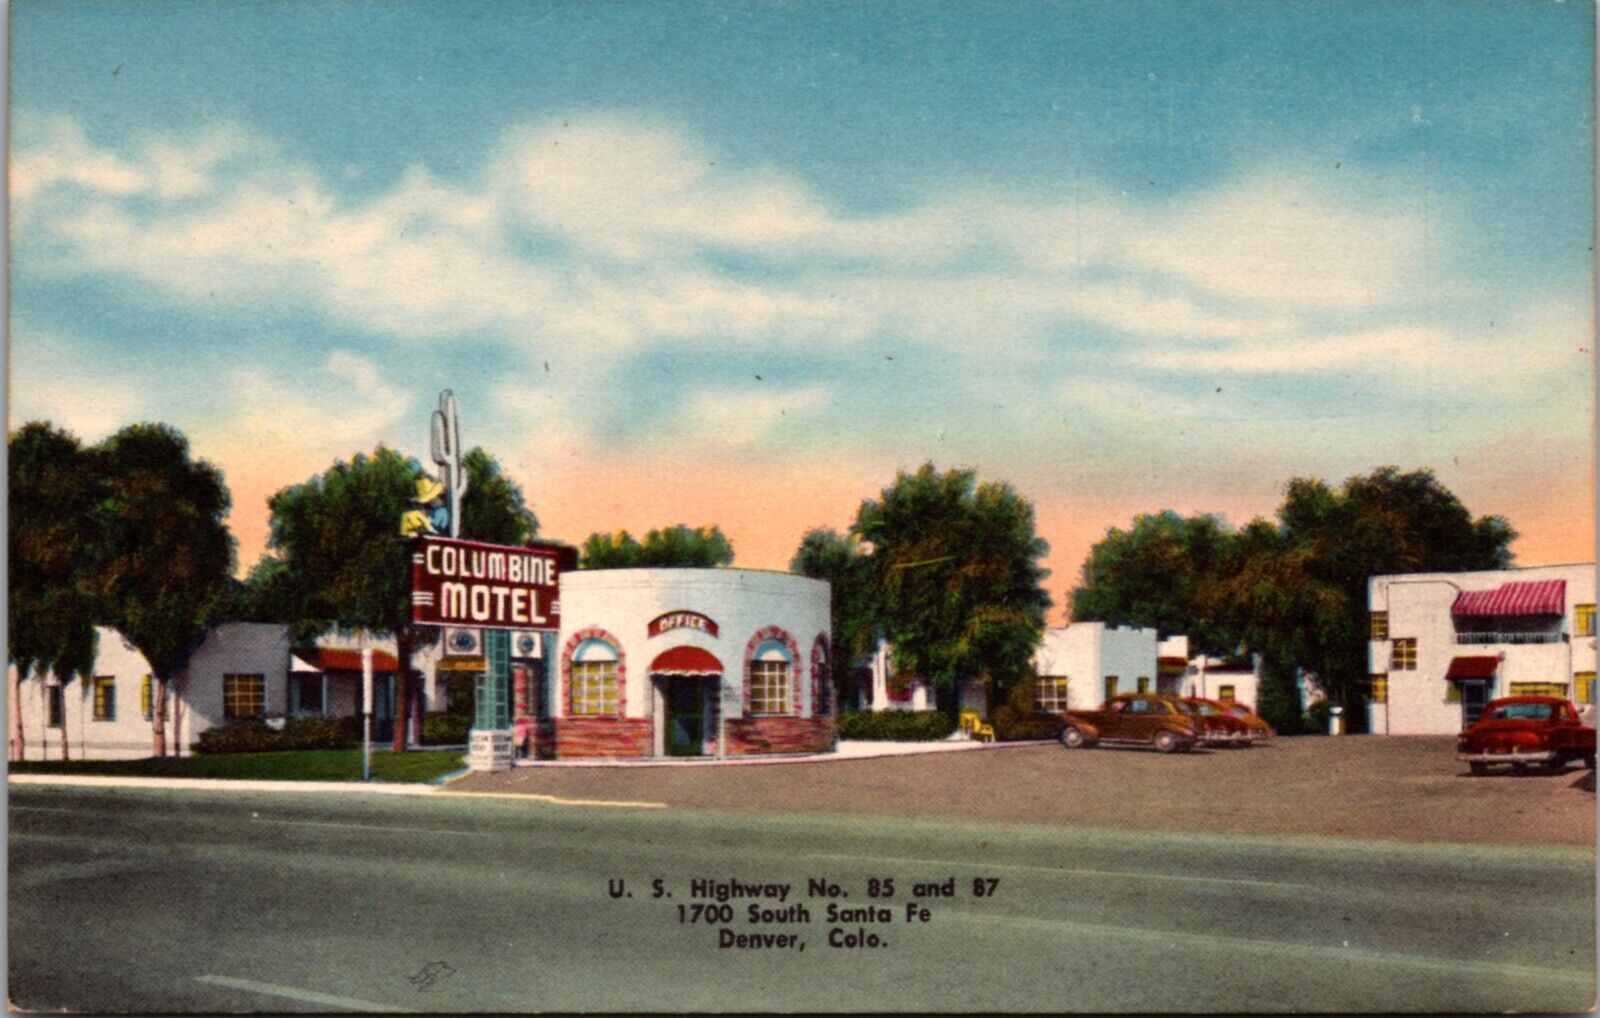 PC Columbine Motel 1700 South Santa Fe in Denver, Colorado US Highway 85 and 87